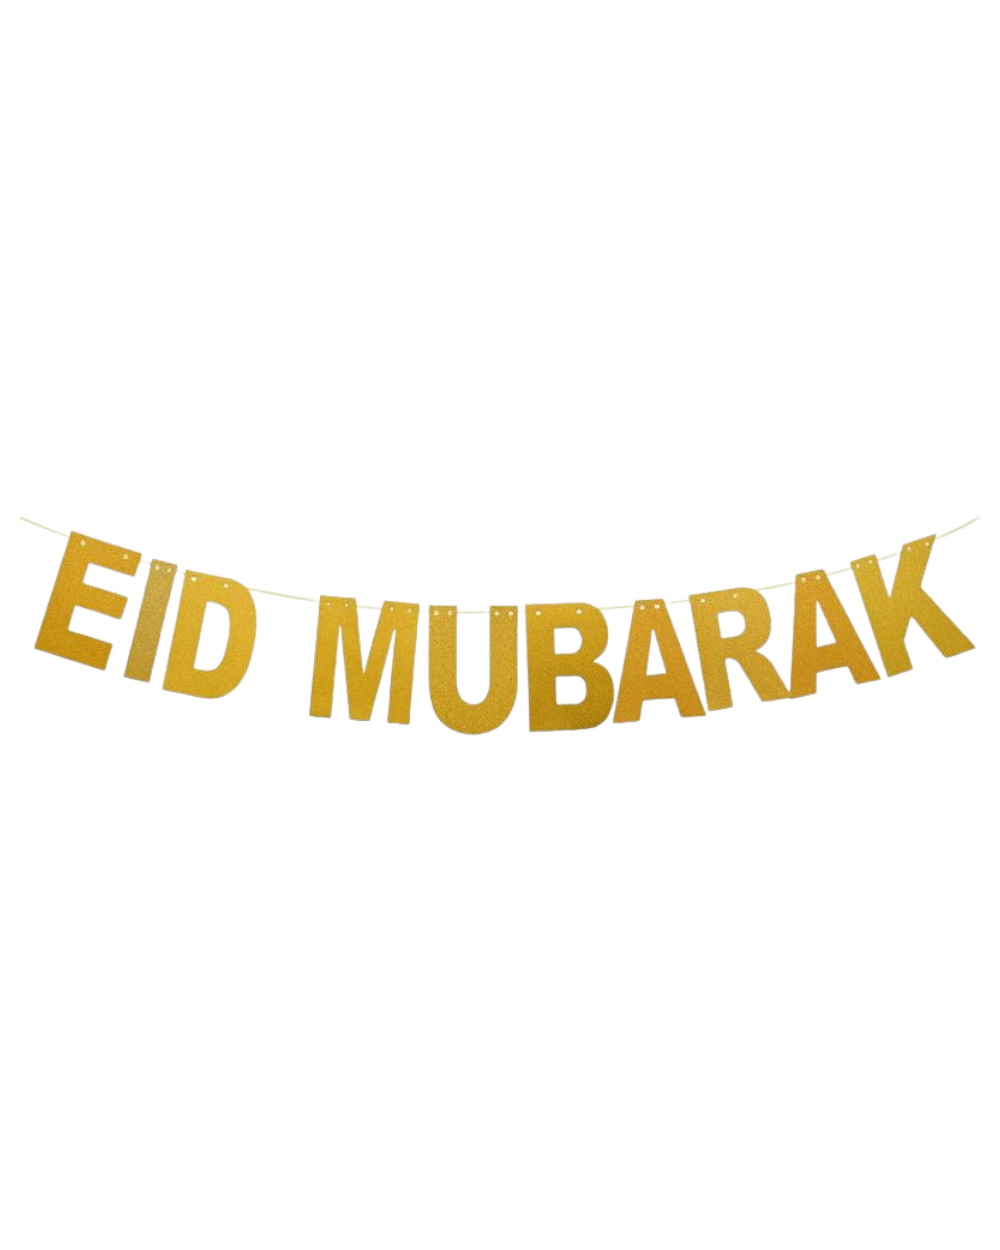 Banderole Eid Mubarak pailletée dorée